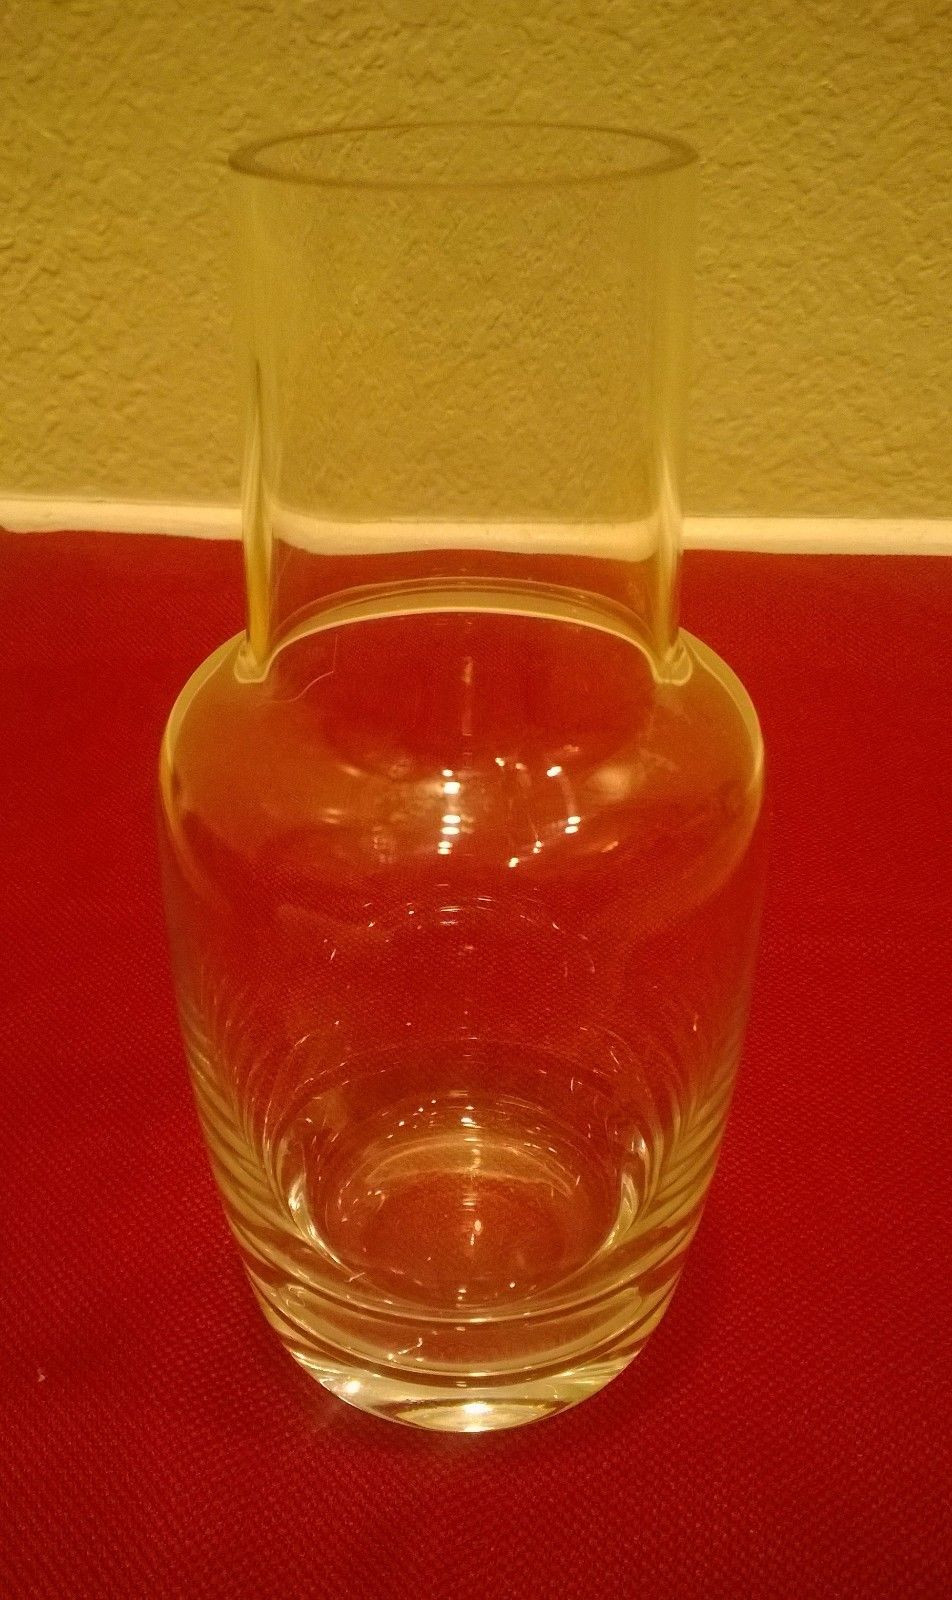 krosno poland crystal vase of poland krosno clear glass vase 13 49 picclick within poland krosno clear glass vase 1 of 6only 1 available